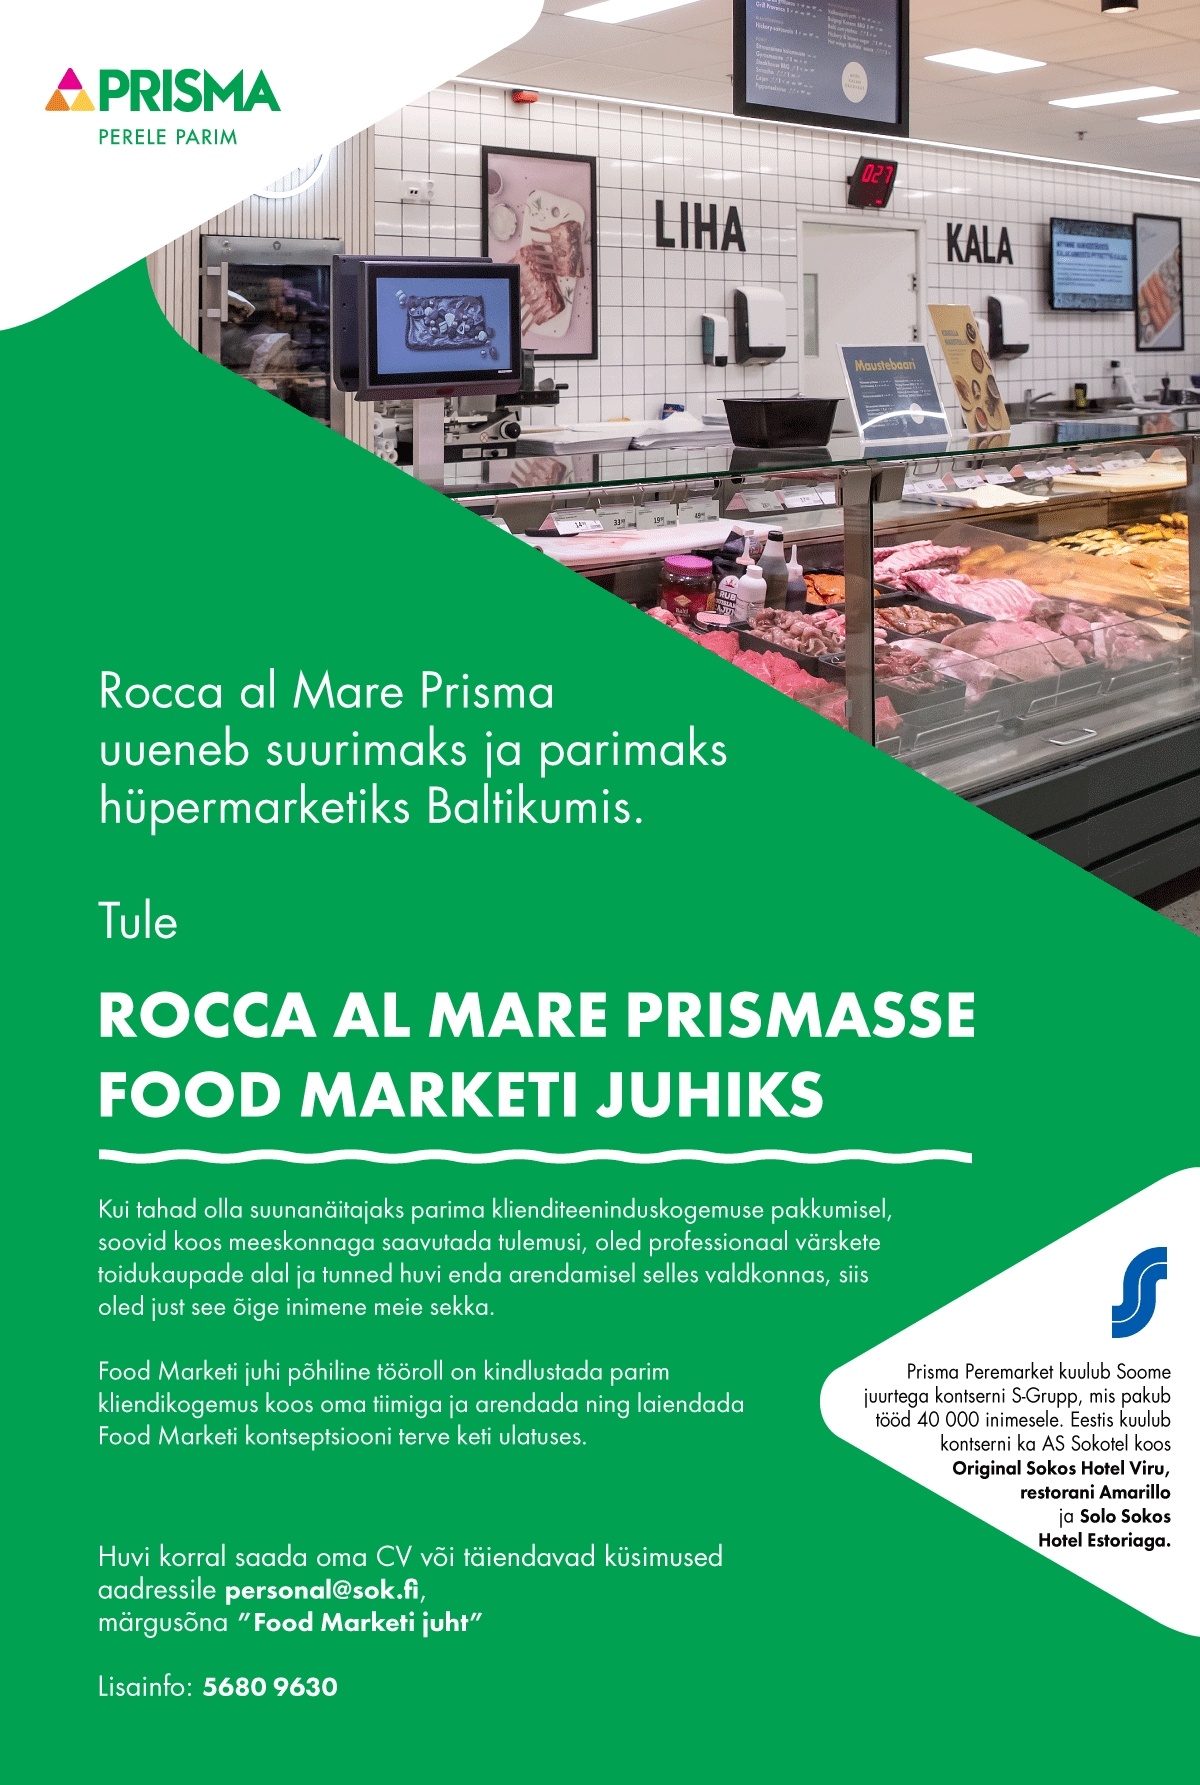 Prisma Peremarket AS Food Marketi juht